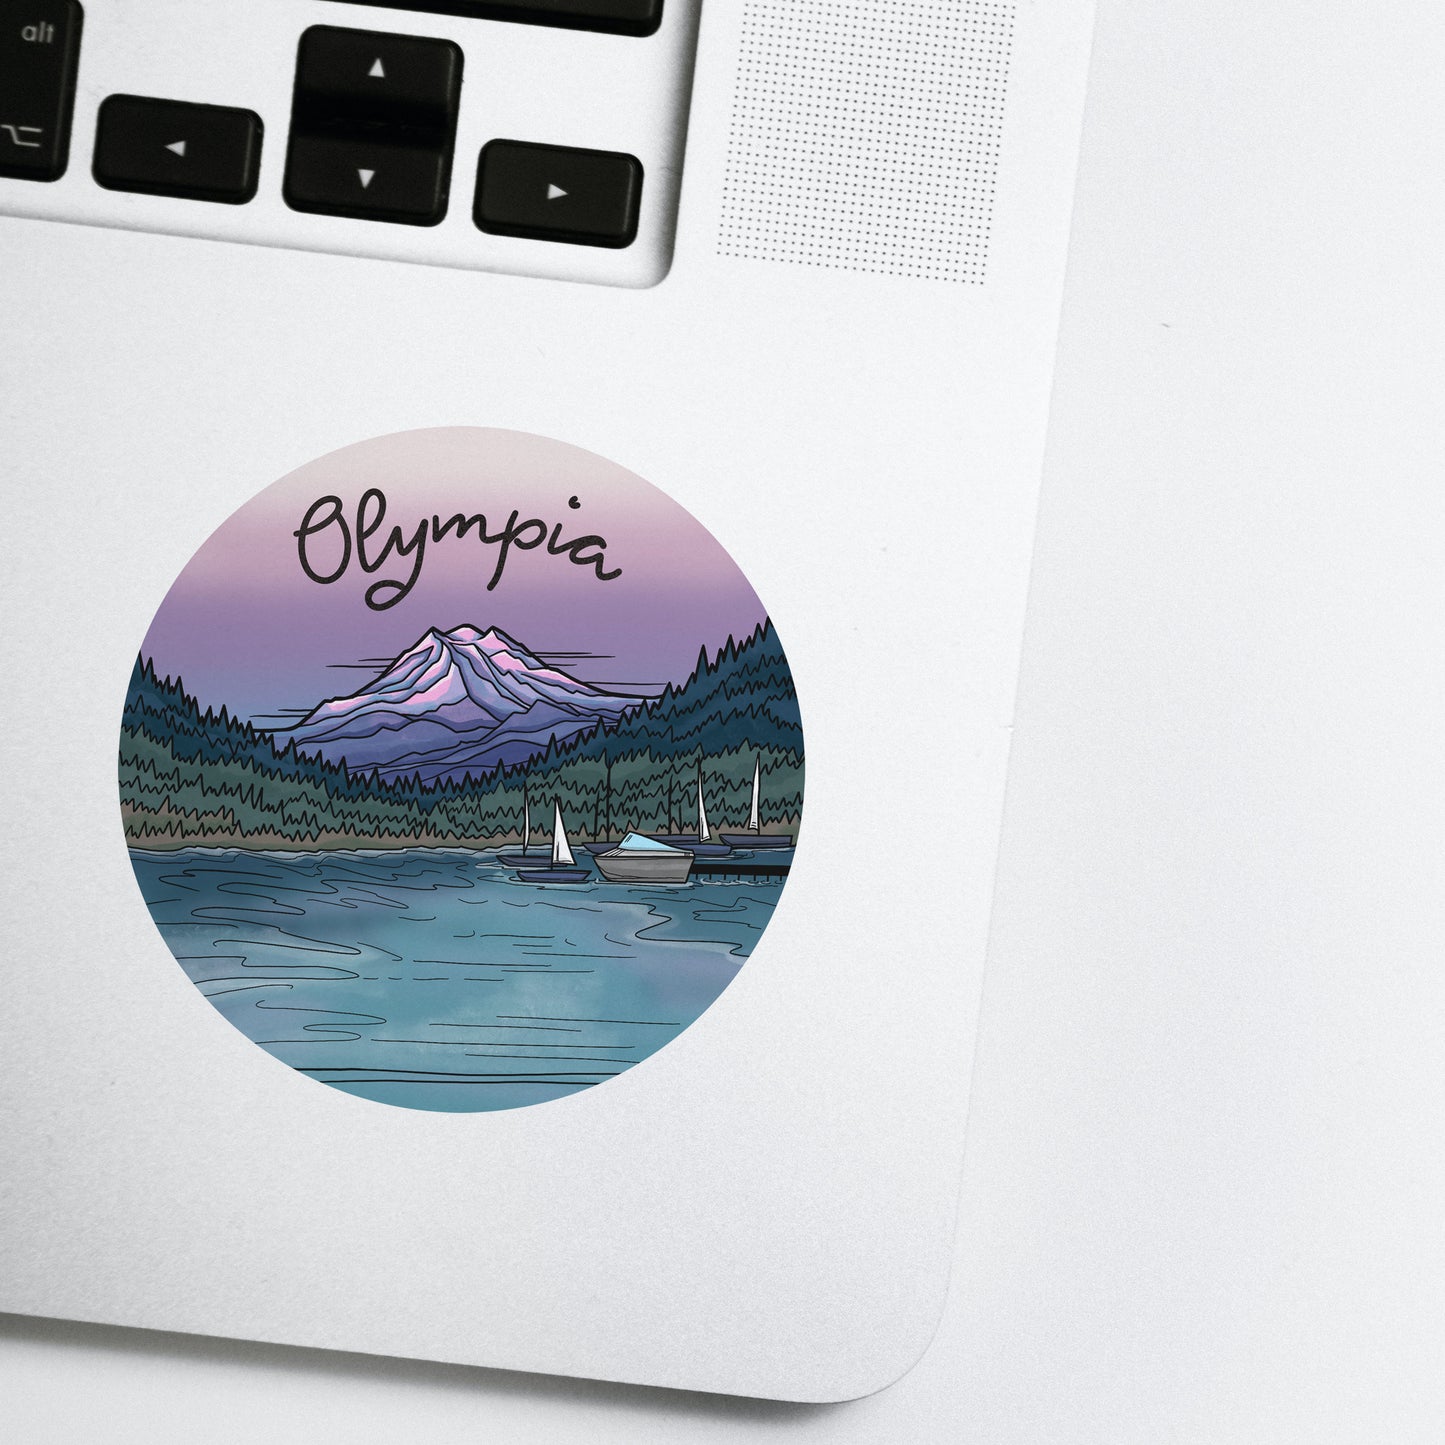 Olympia Puget Sound sticker